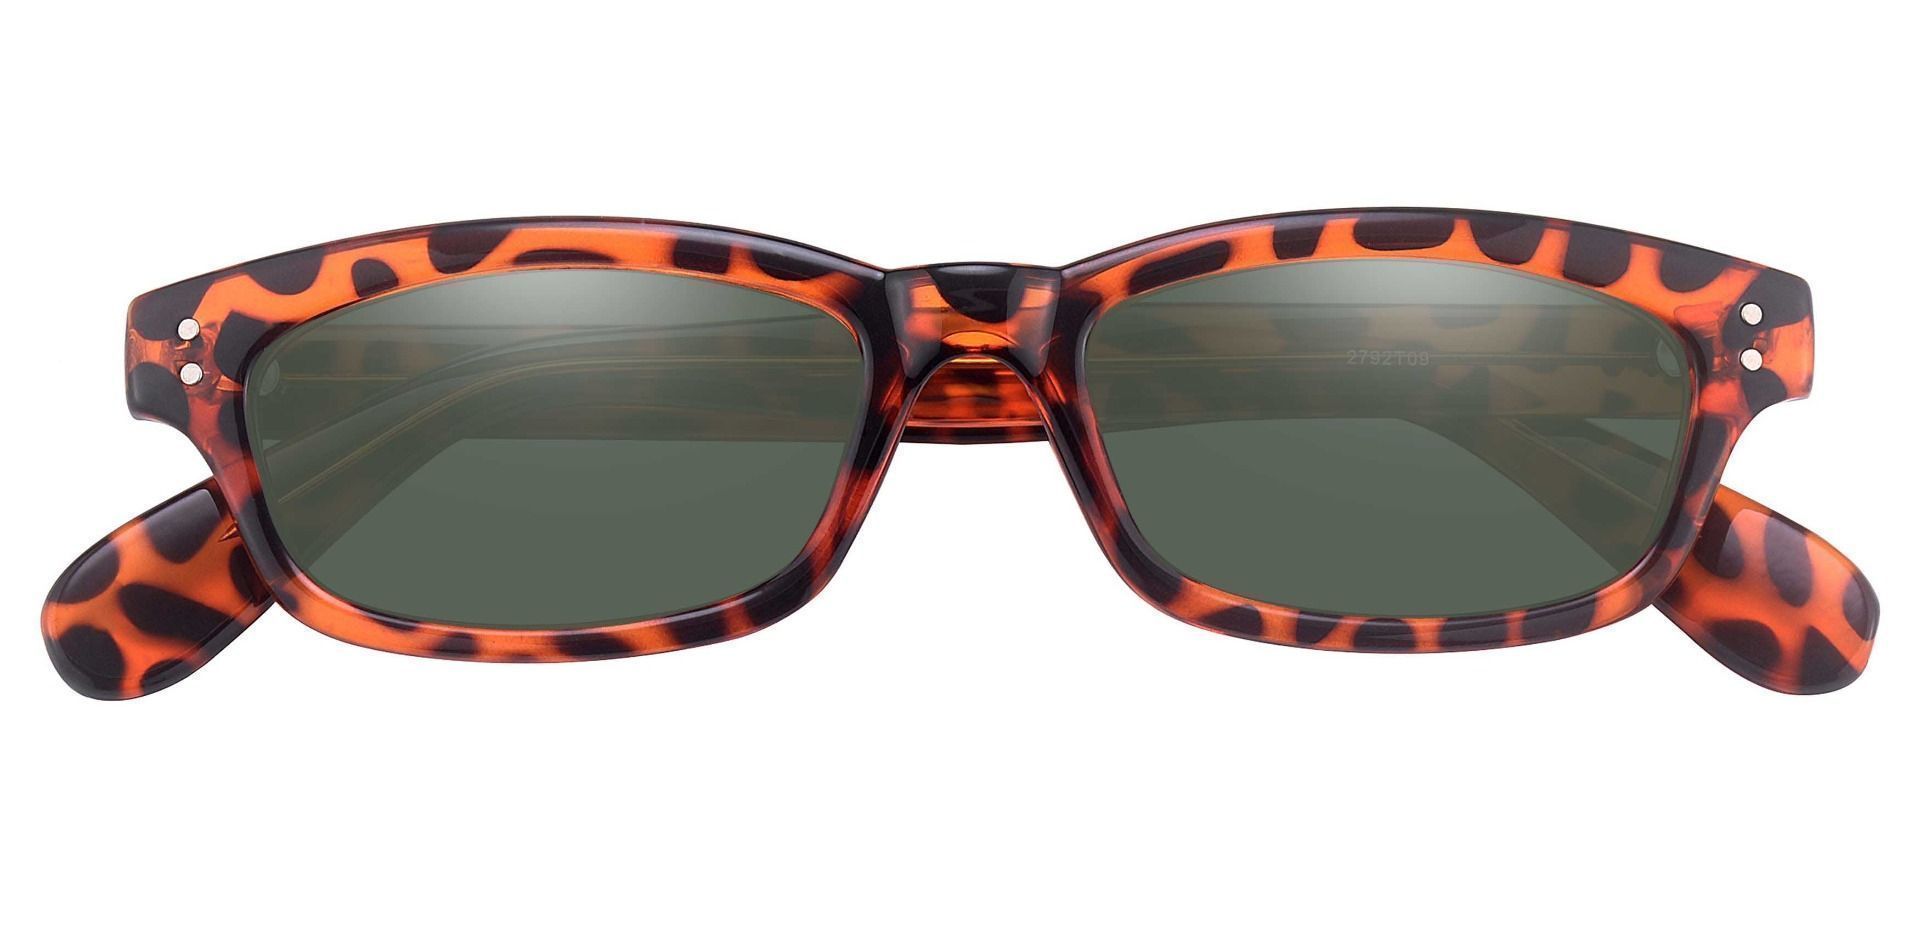 Panthera Rectangle Prescription Sunglasses -  Tortoise Frame With Green Lenses